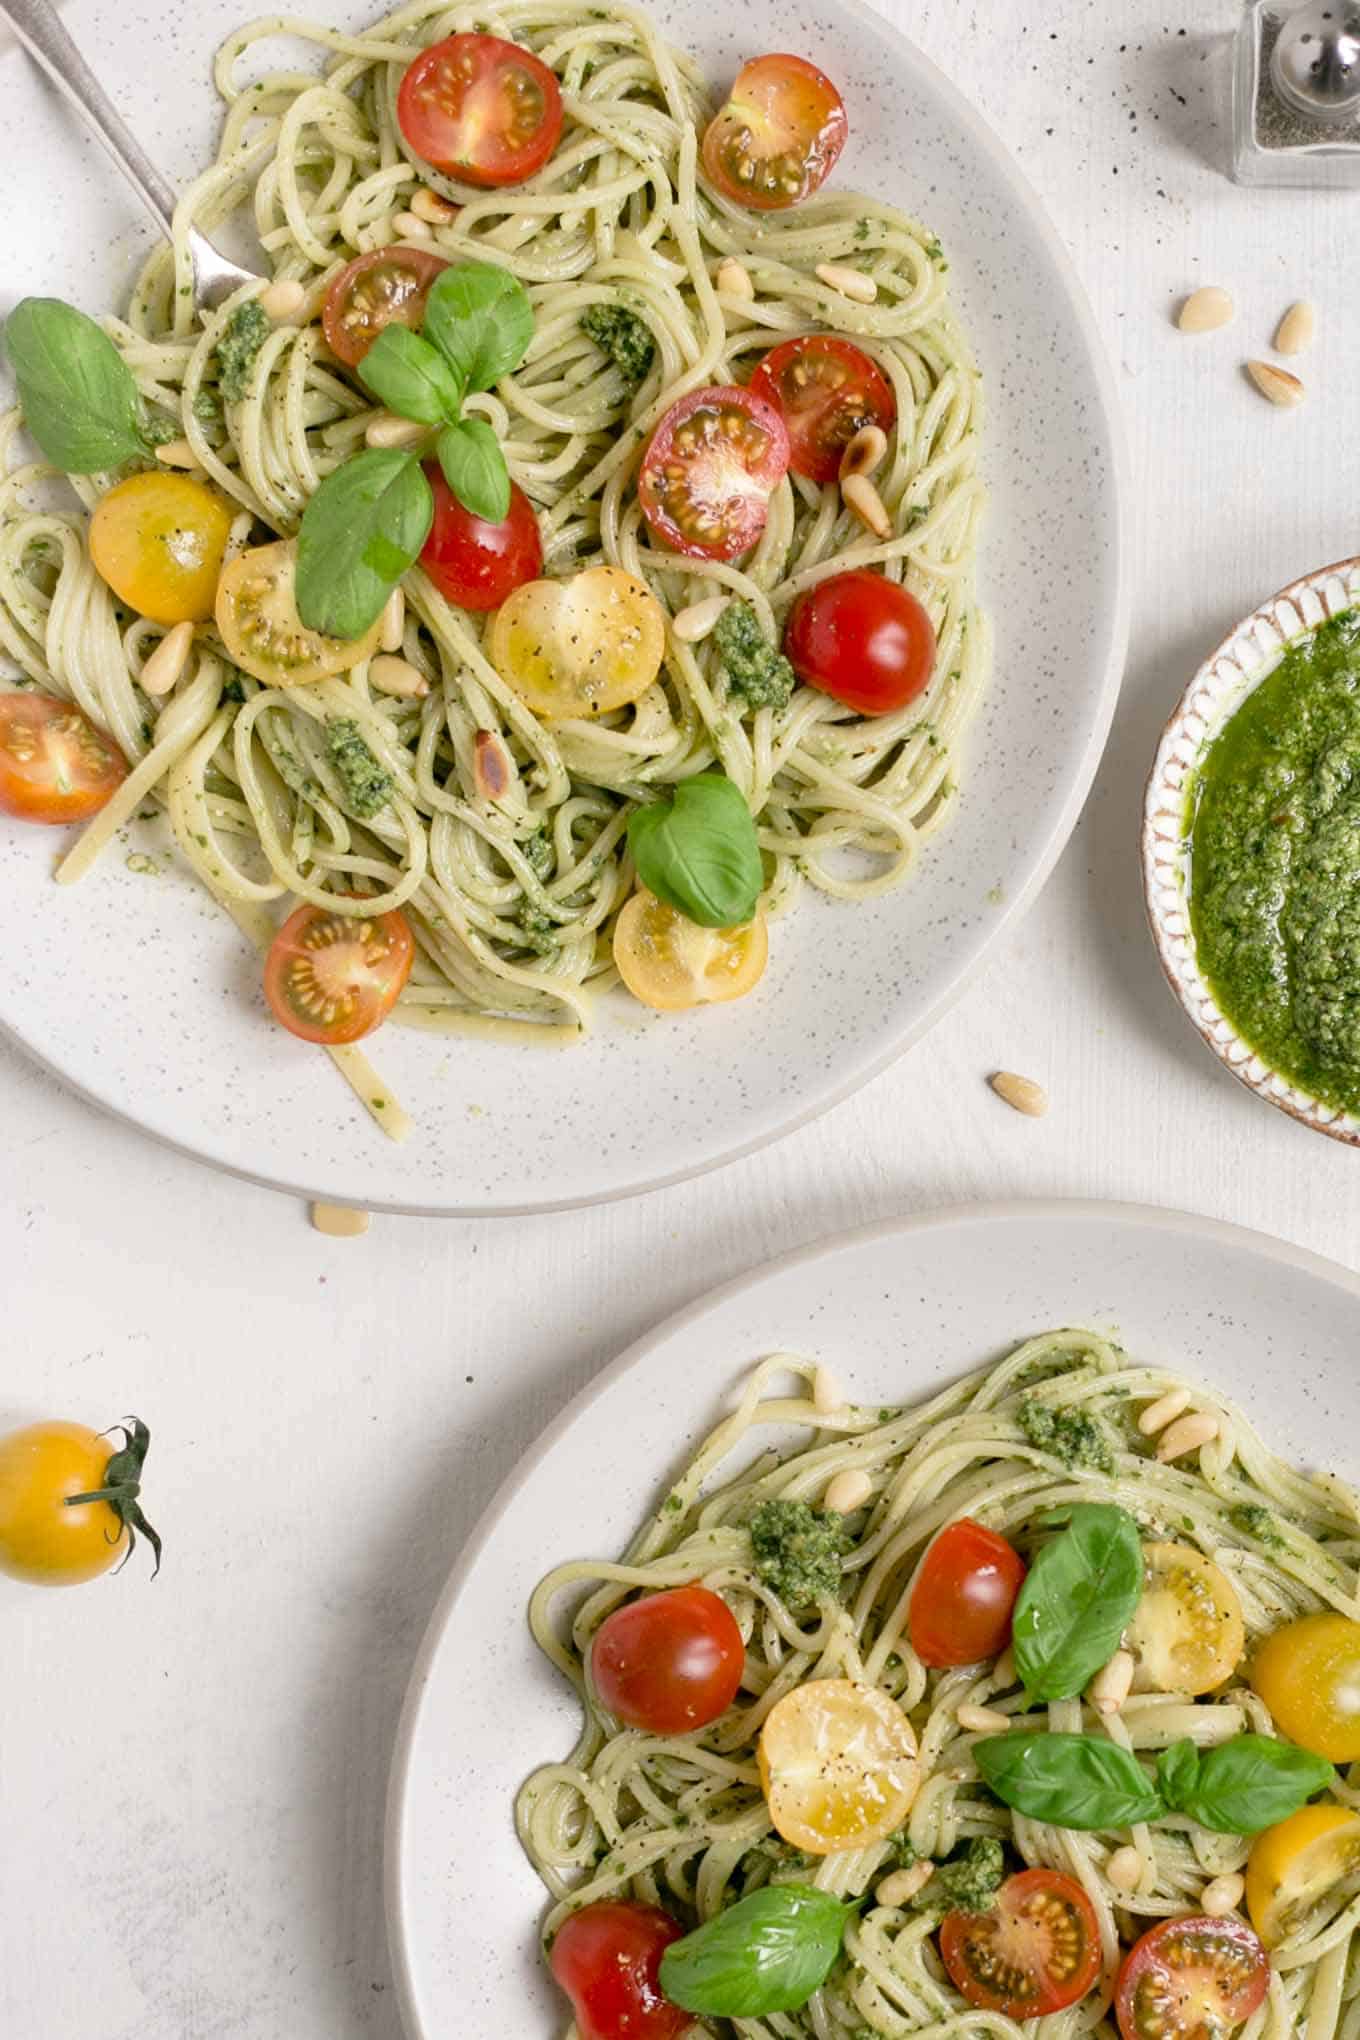 Pesto pasta with juicy cherry tomatoes! Ready in 15 minutes! #veganrecipe #dairyfree #healthyrecipe | via @annabanana.co